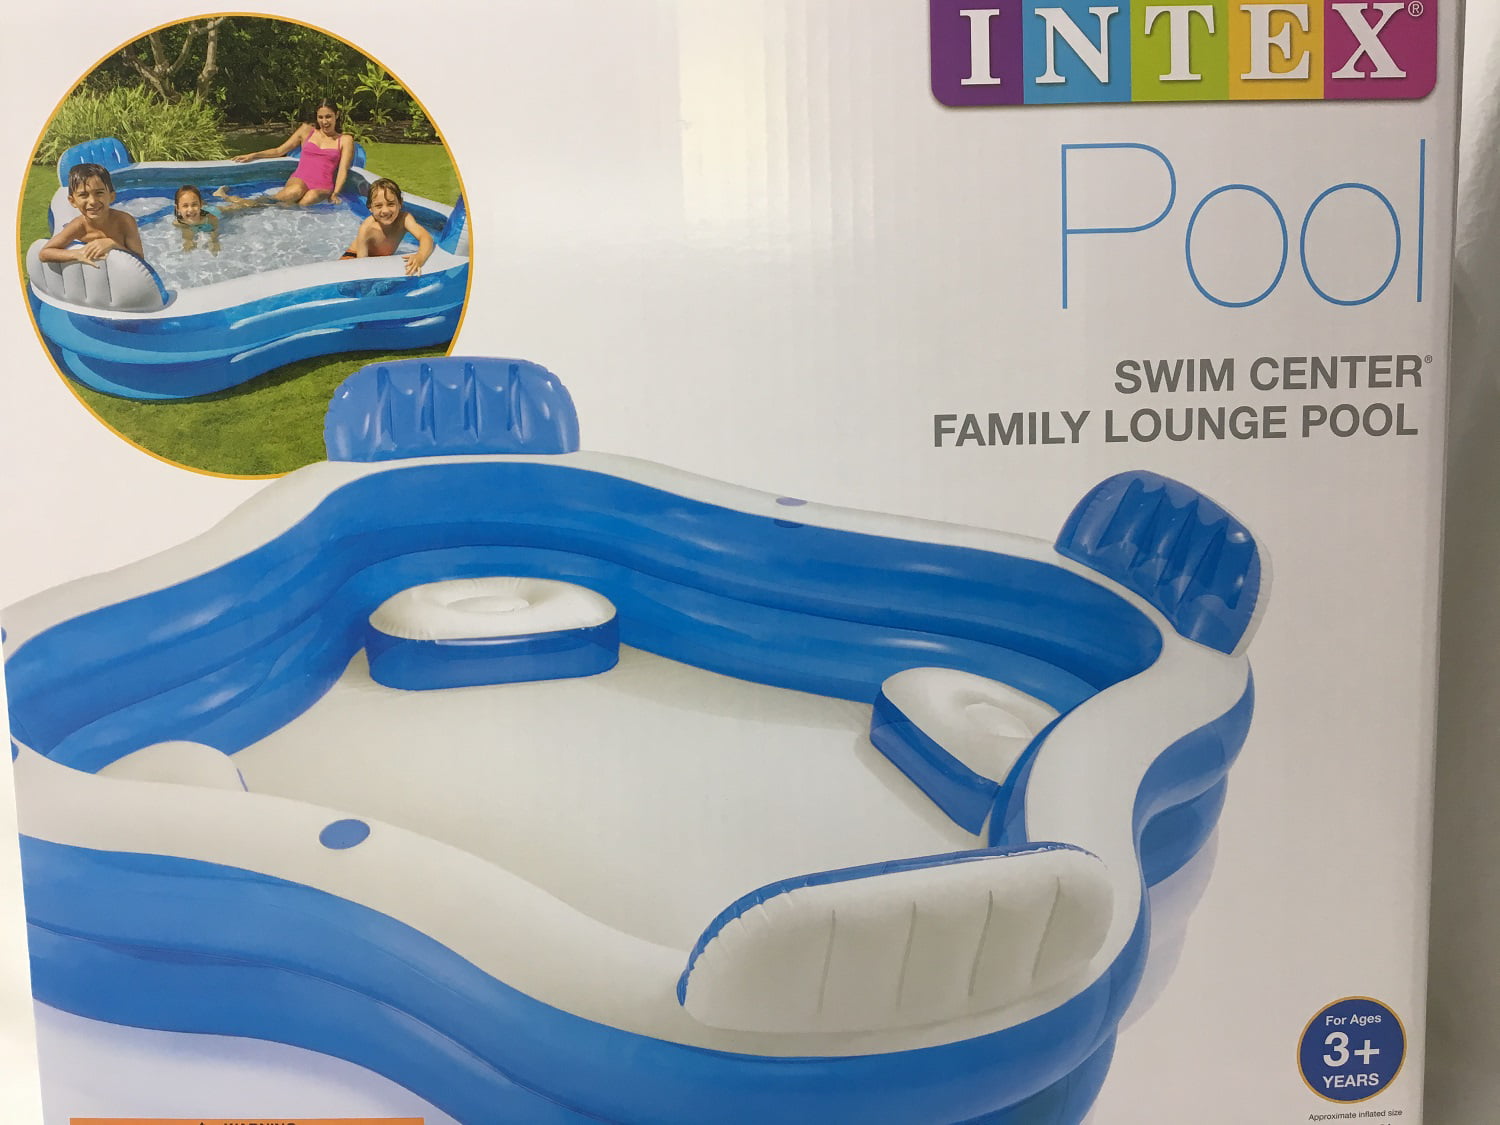 ✅Crane Inflatable Rectangle Swimming Pool Adult Kids Family 79/"x59/" Like Intex